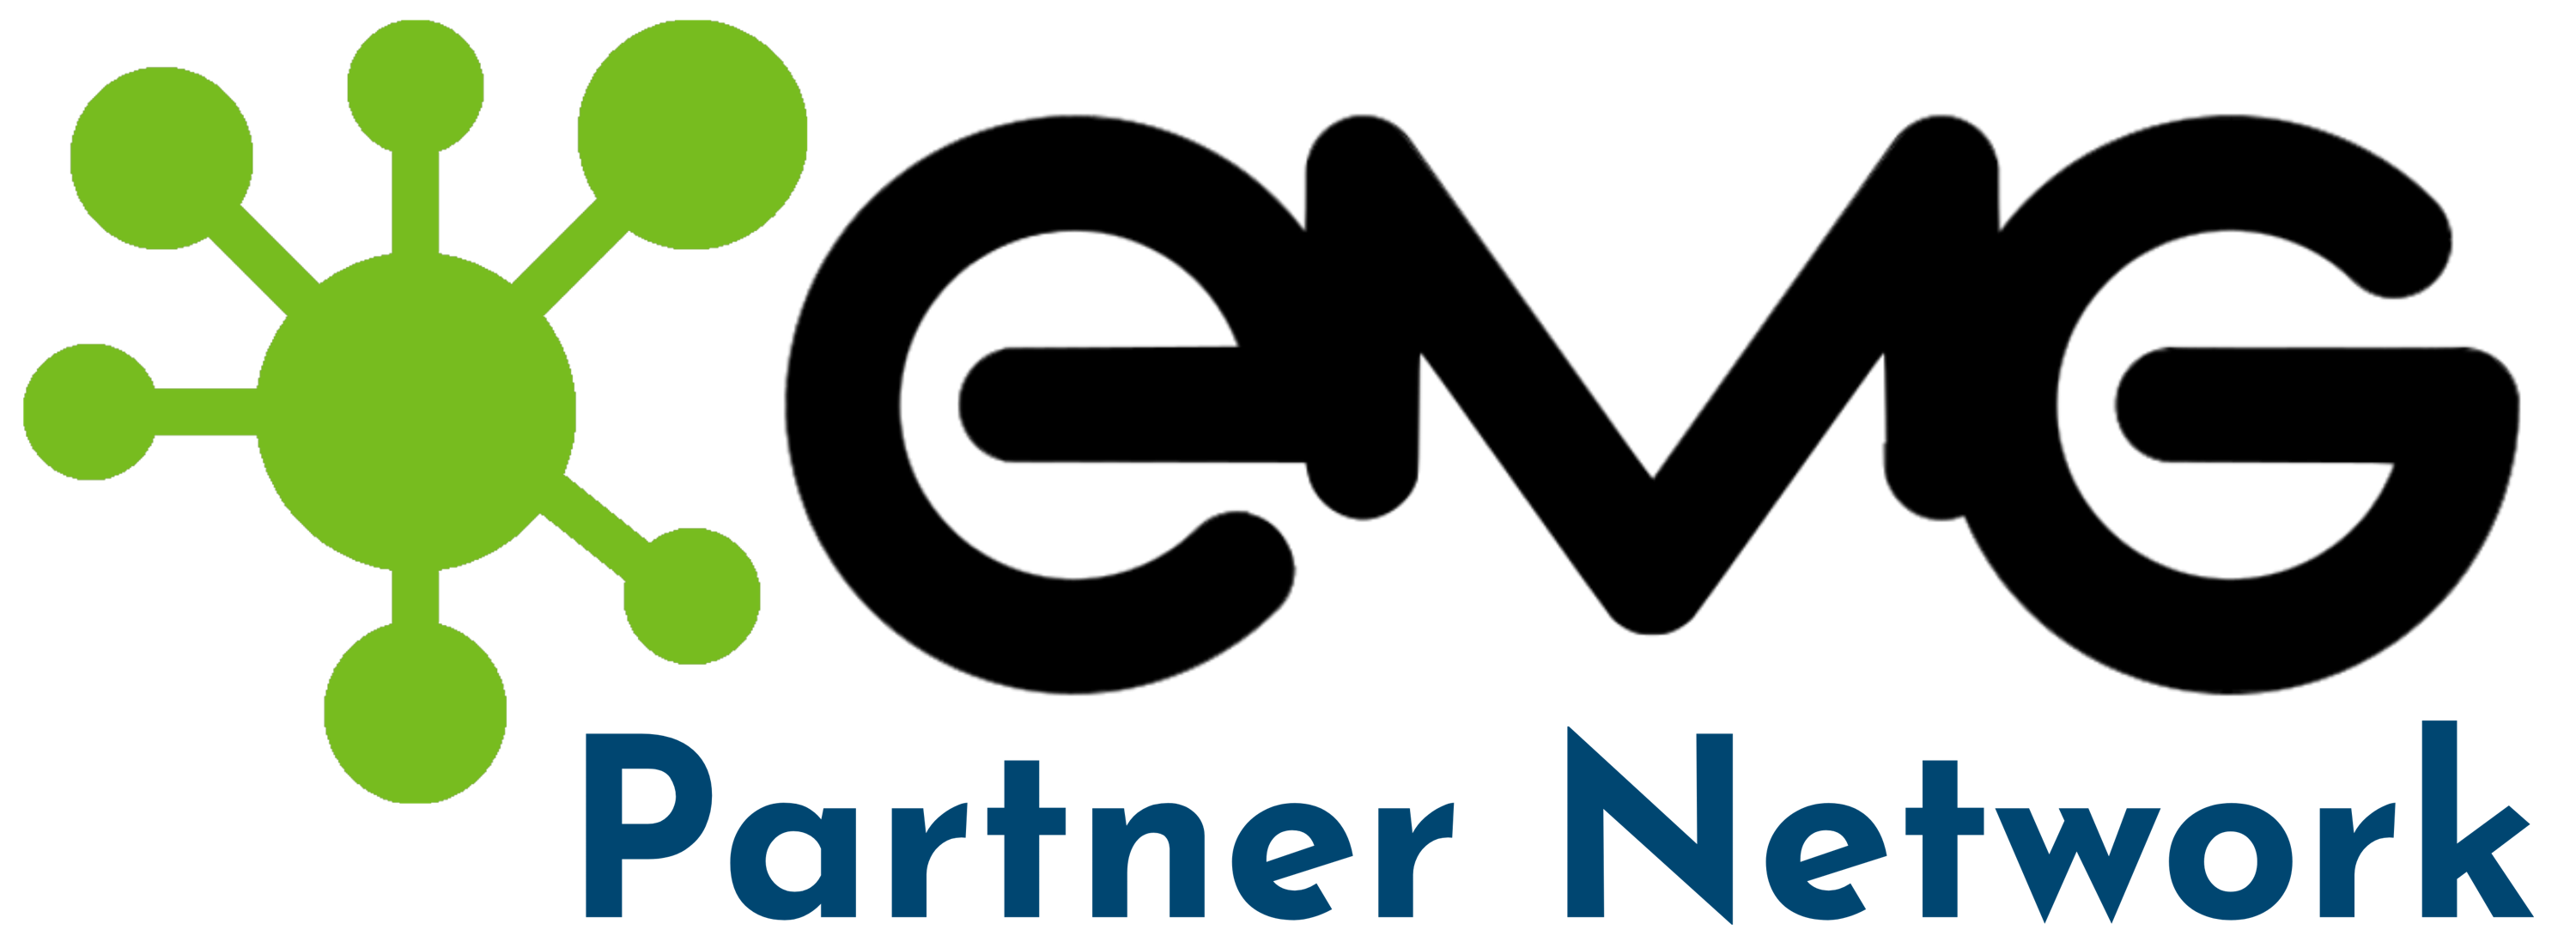 EMG Partner Network Logo